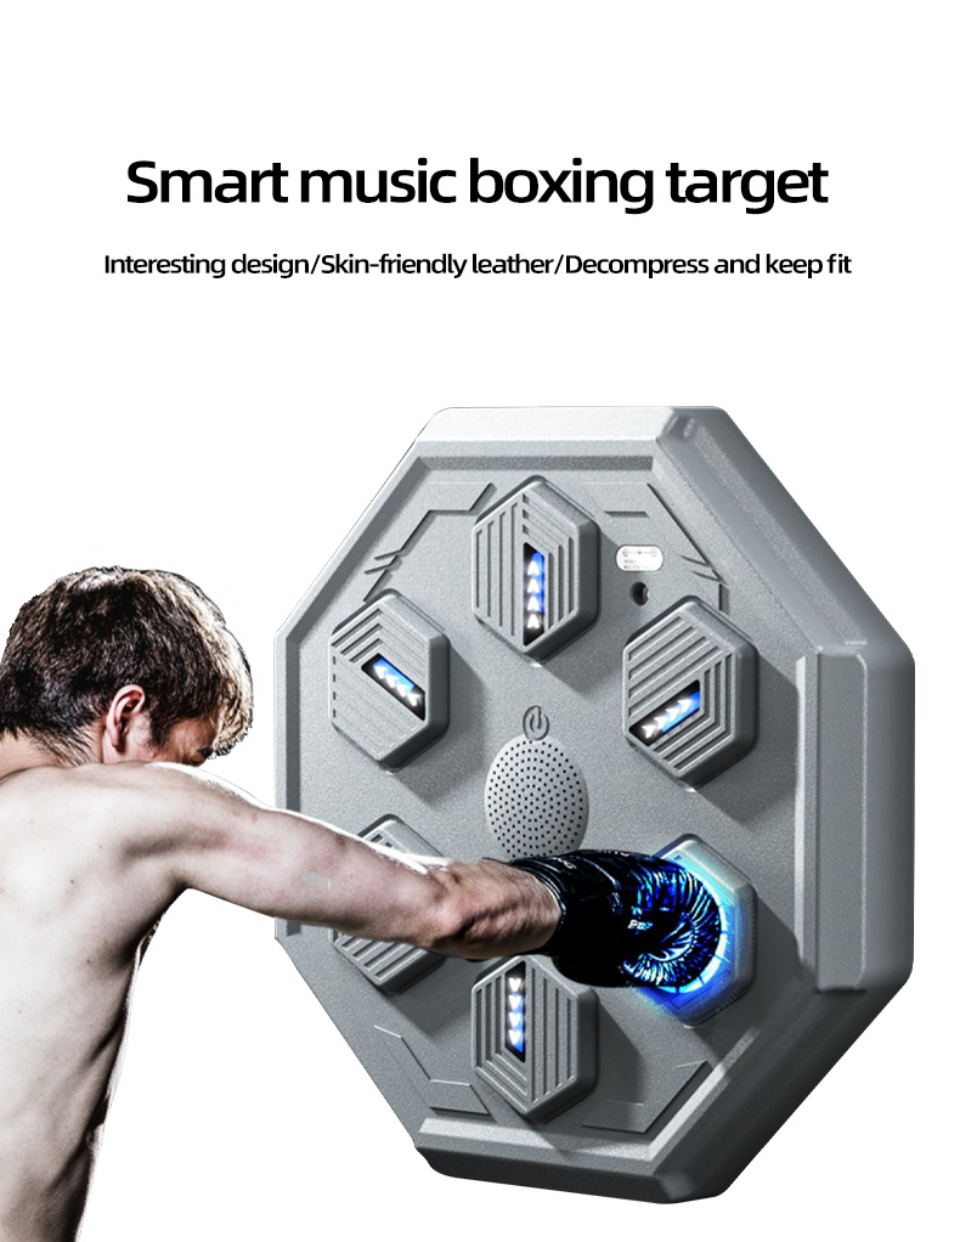 2023 New Boxing Training Music Machine Electronic Boxing Wall Target Smart  Wall Mounted Combat